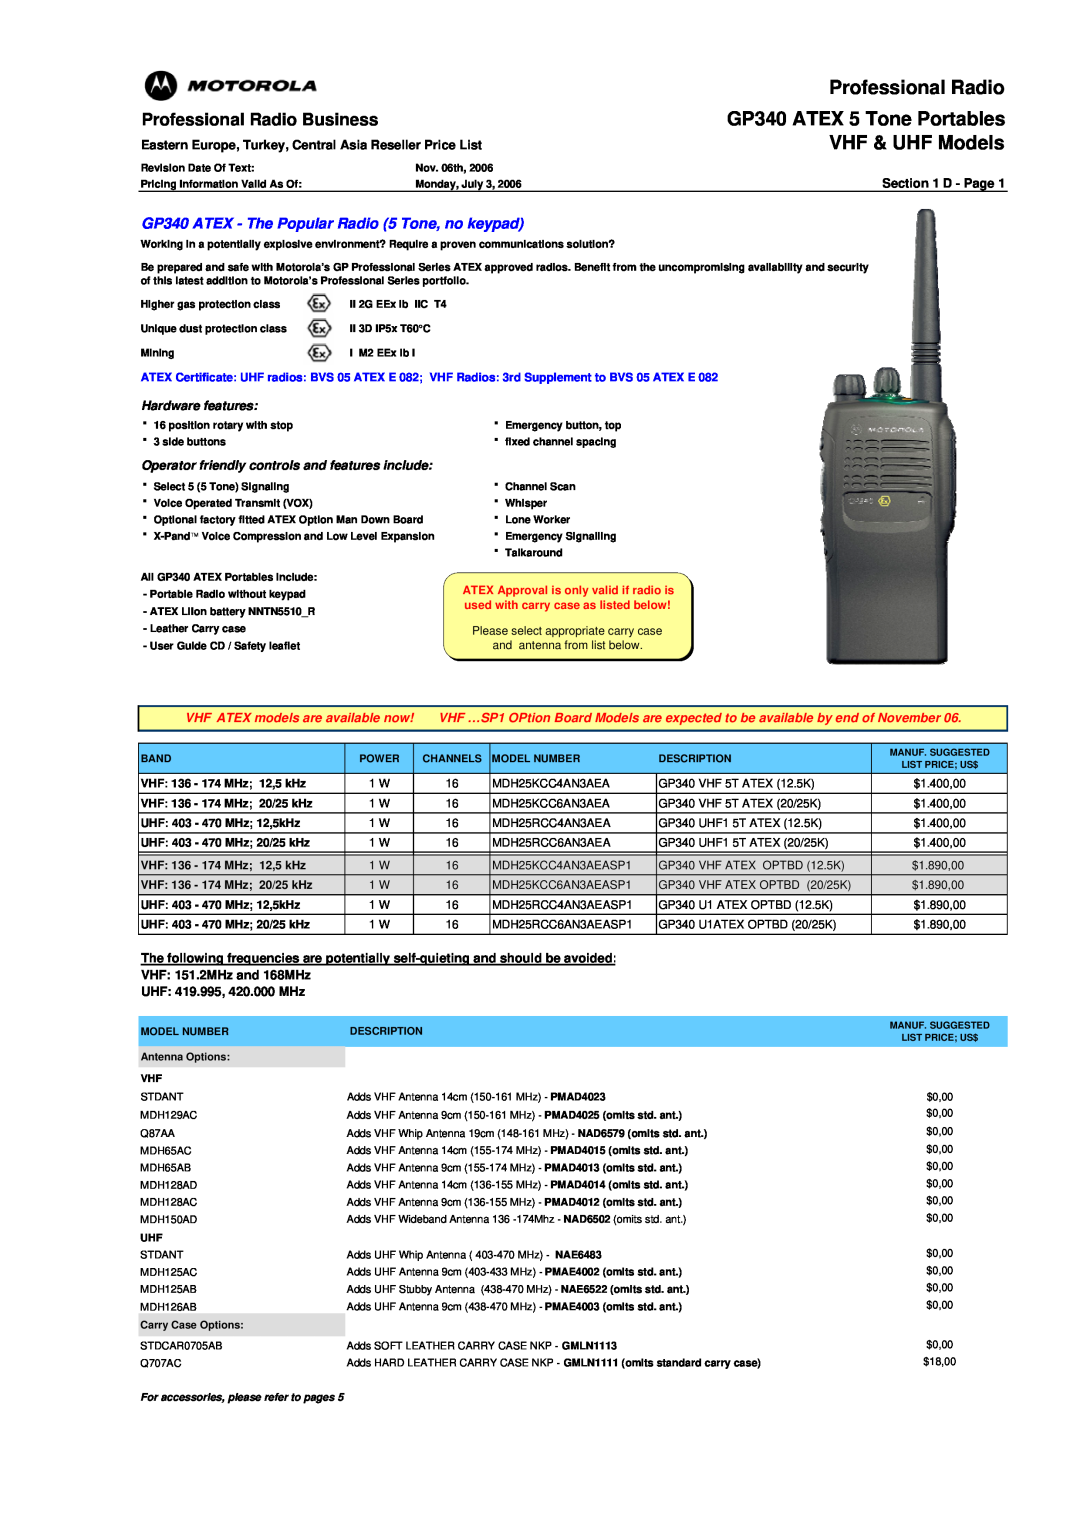 Motorola manual GP340 ATEX 5 Tone Portables, VHF & UHF Models, Professional Radio Business, Hardware features 